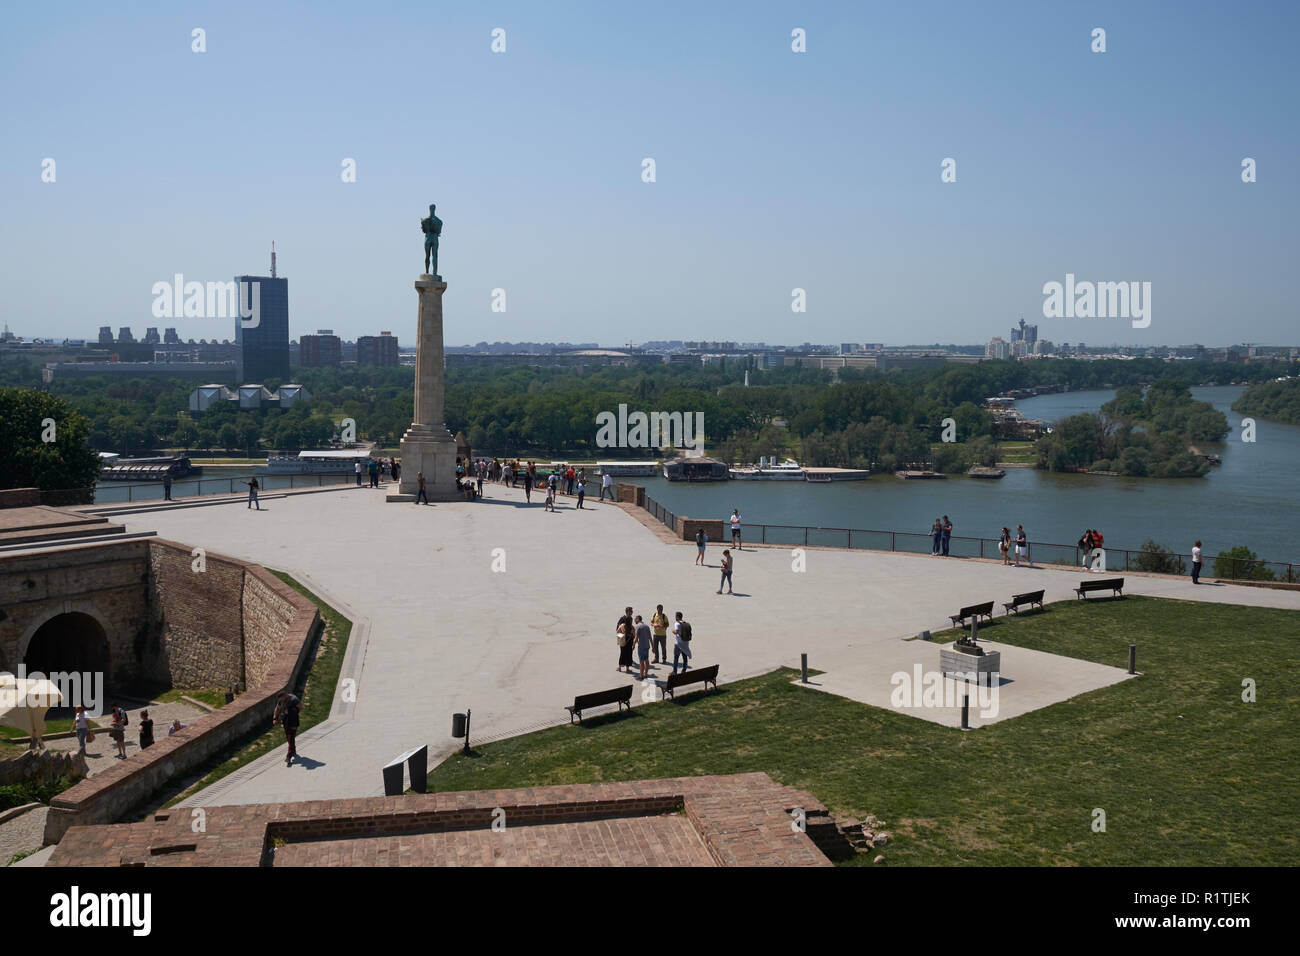 The Victor (Pobednik) monument, Belgrade Fortress, Kalemegdan Park, Belgrade, Serbia. Stock Photo